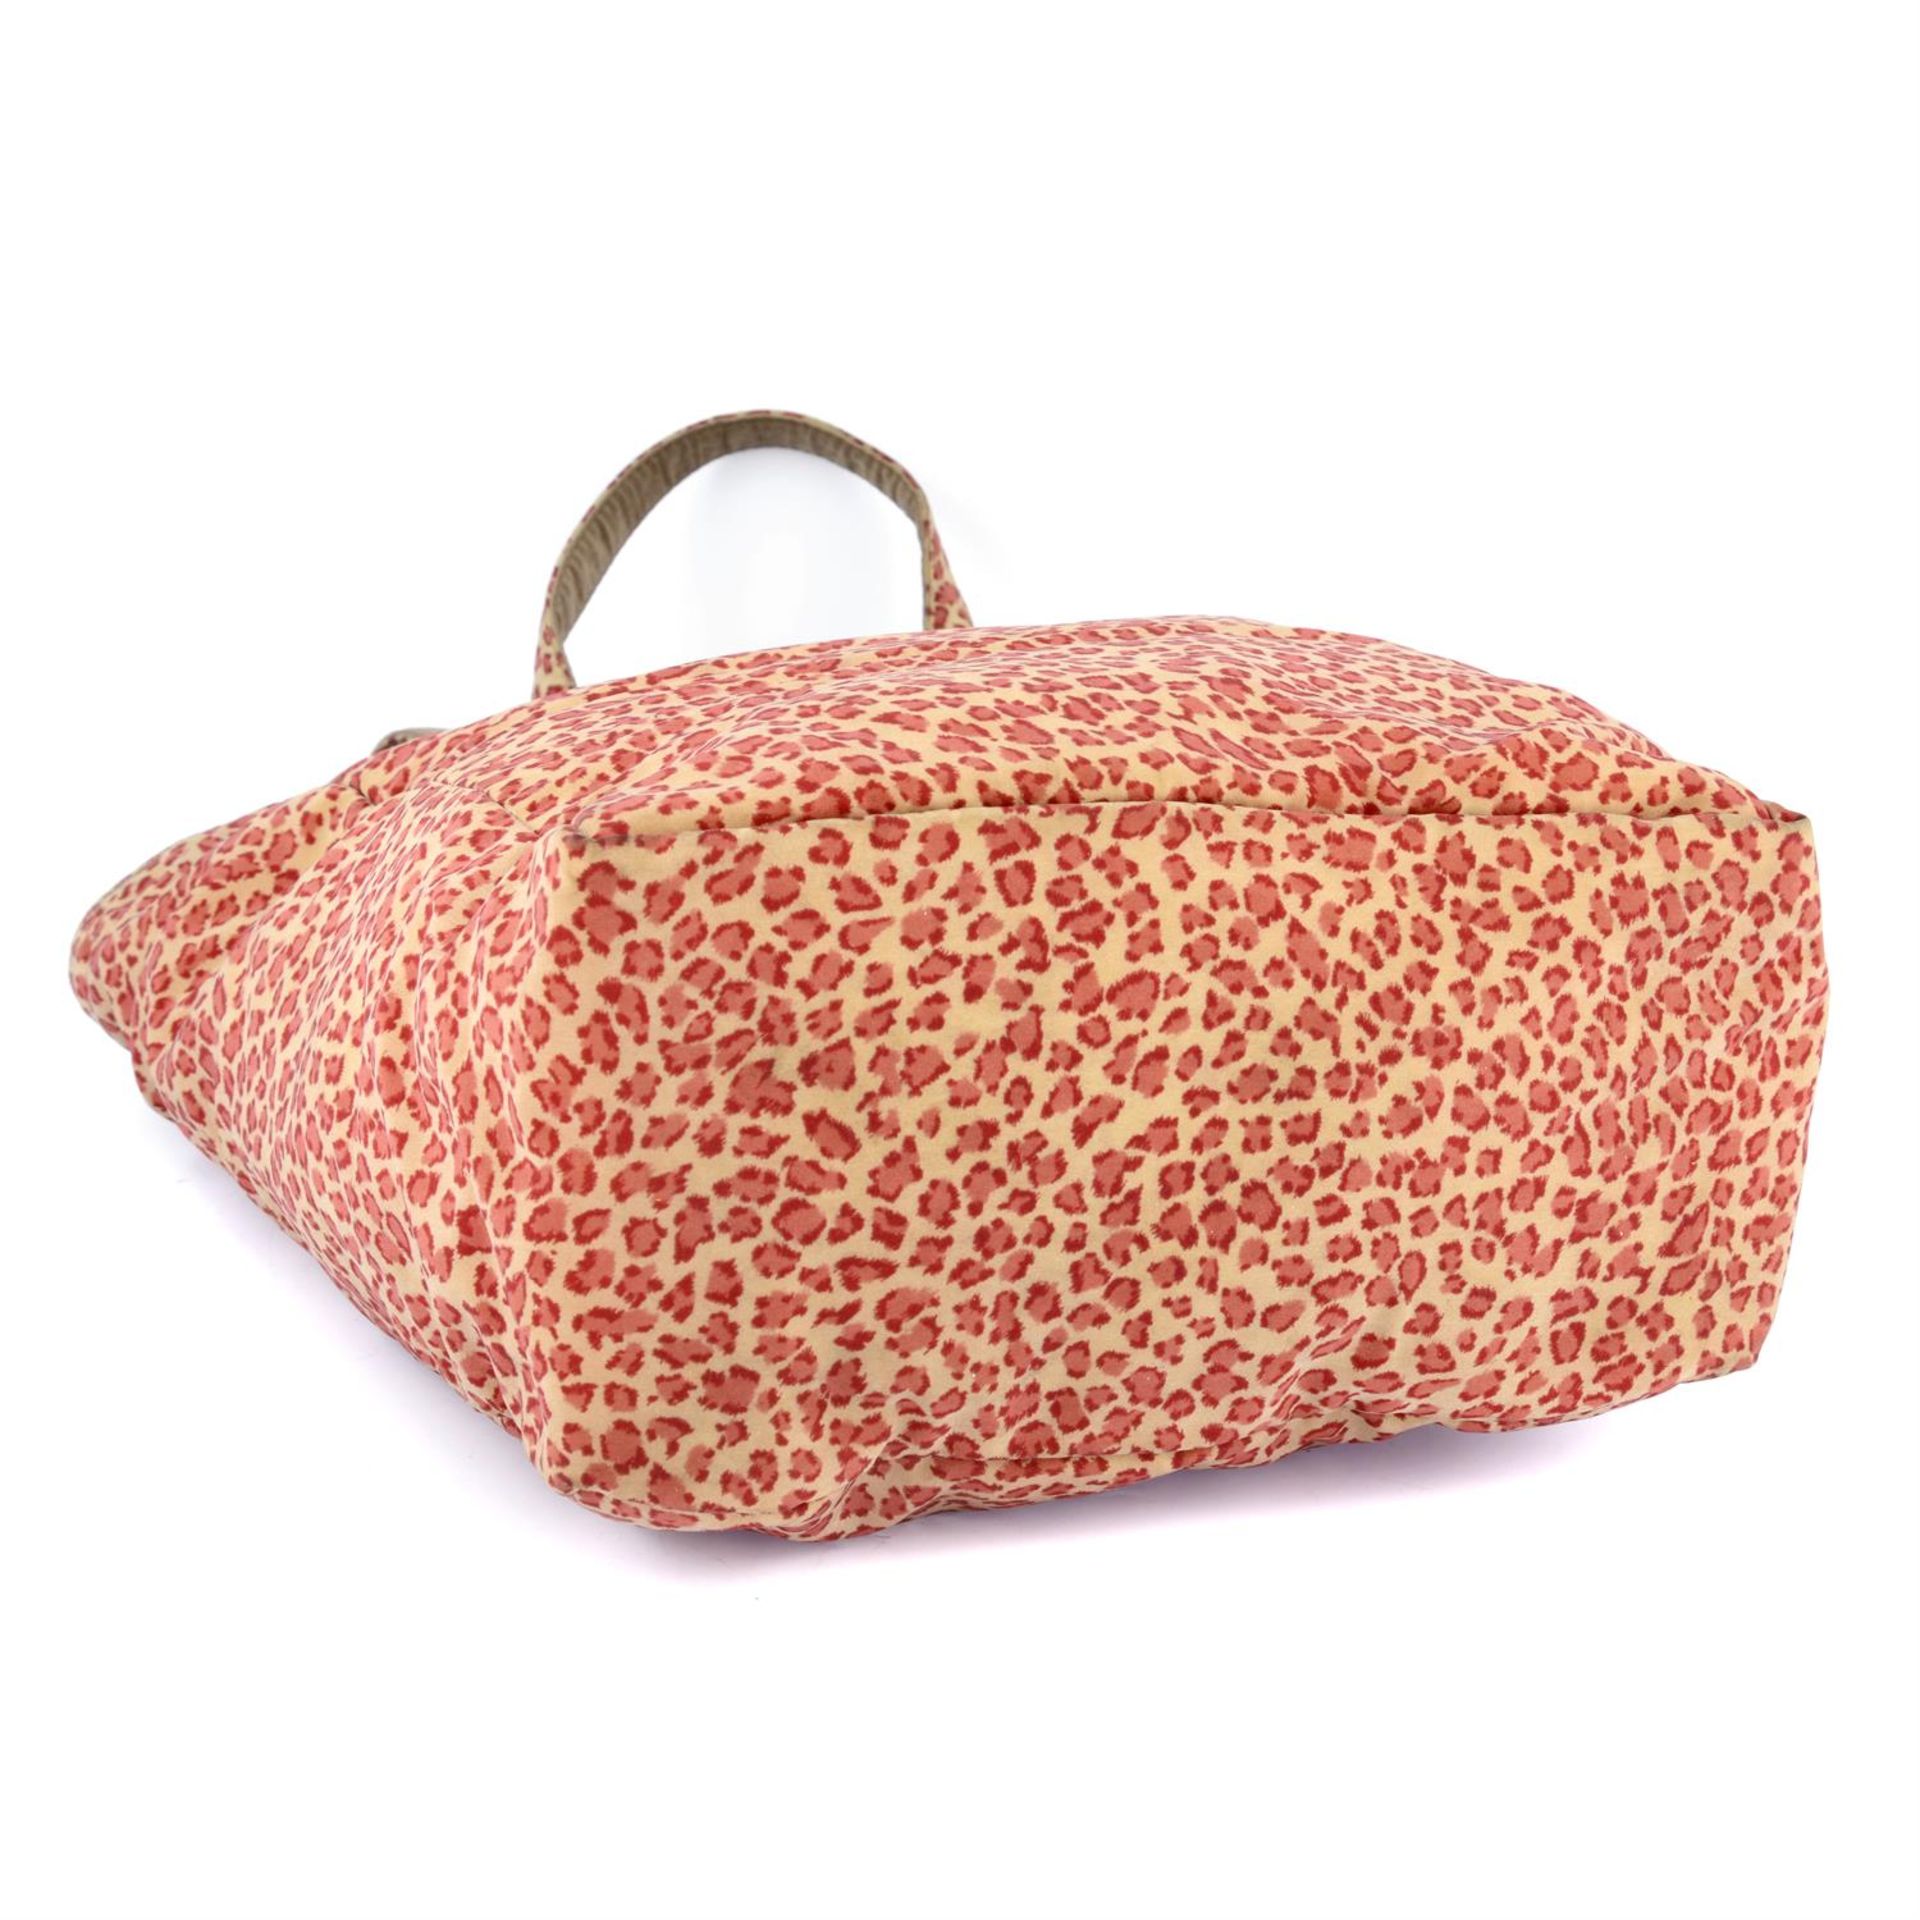 BOTTEGA VENETA - a reversible nylon Leopard print shopping bag. - Image 4 of 4